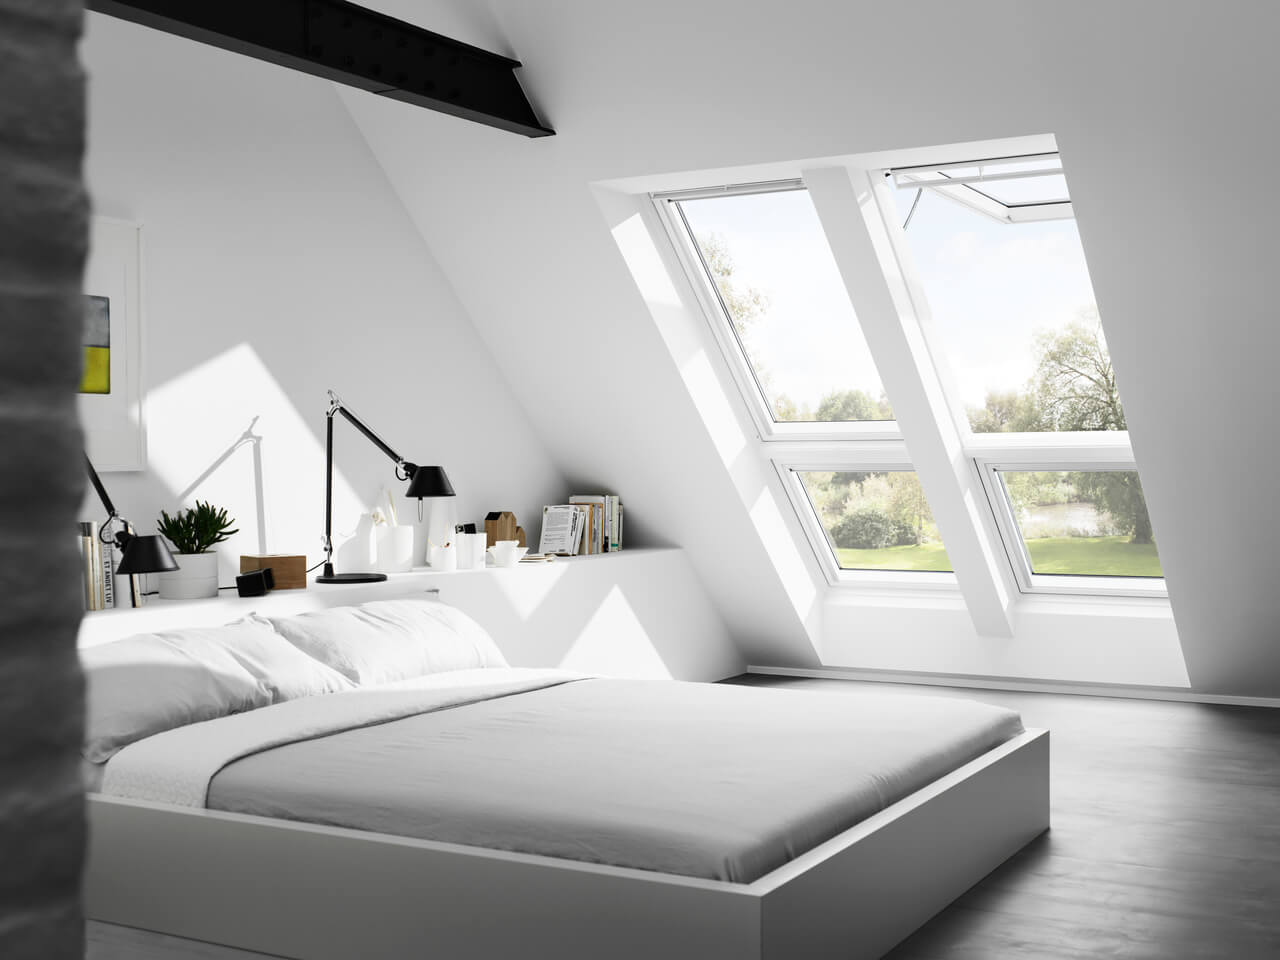 Modern loft bedroom with VELUX skylights and minimalist decor.